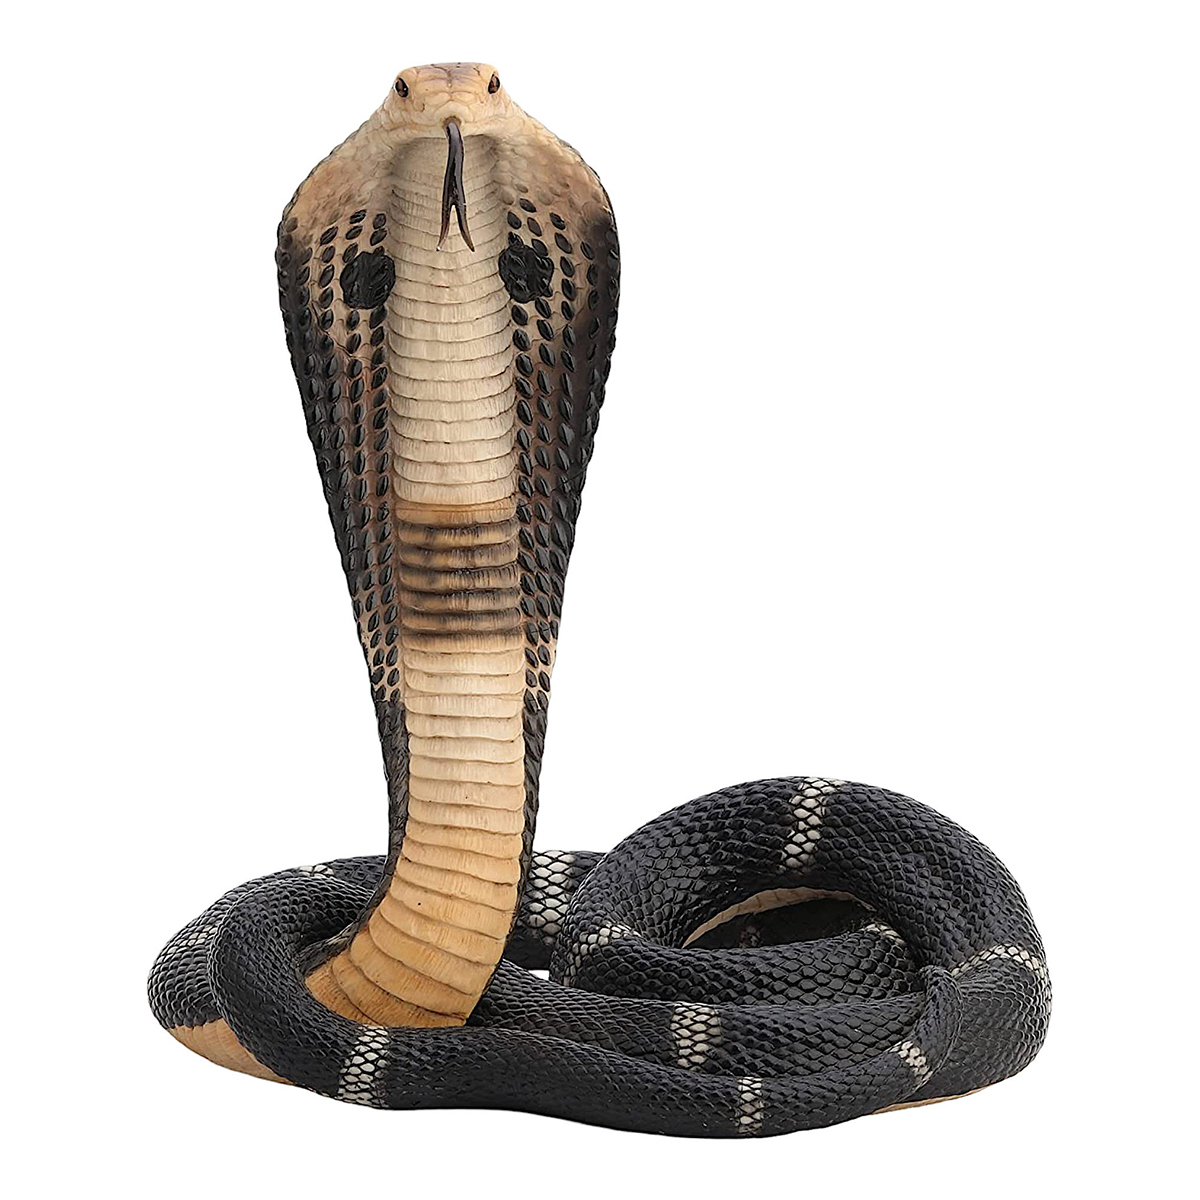 Cobra Snake Statue